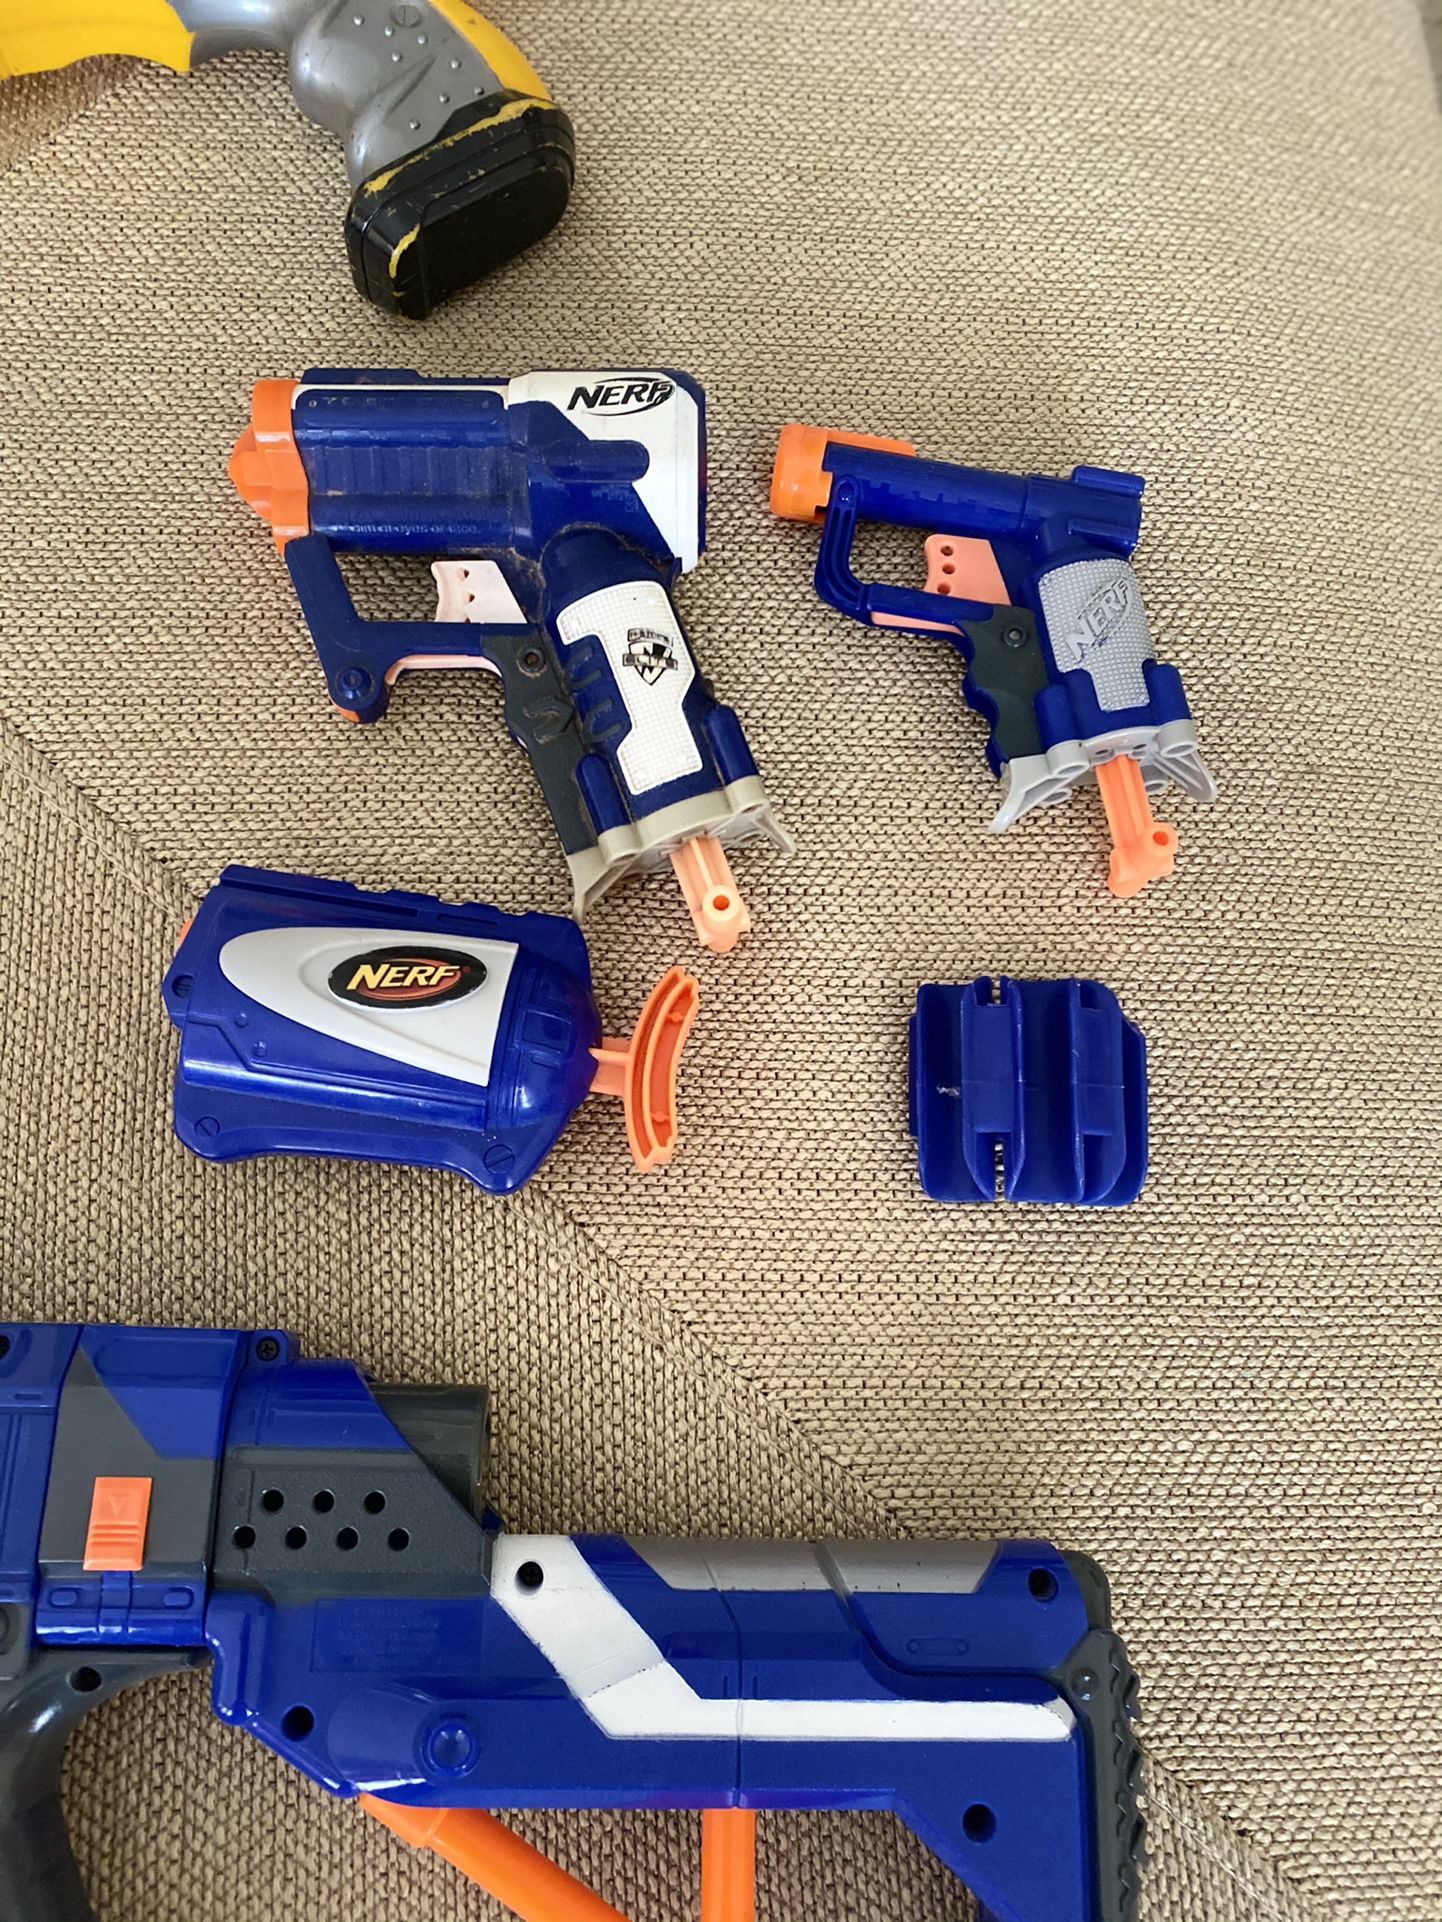 8 Nerf Guns